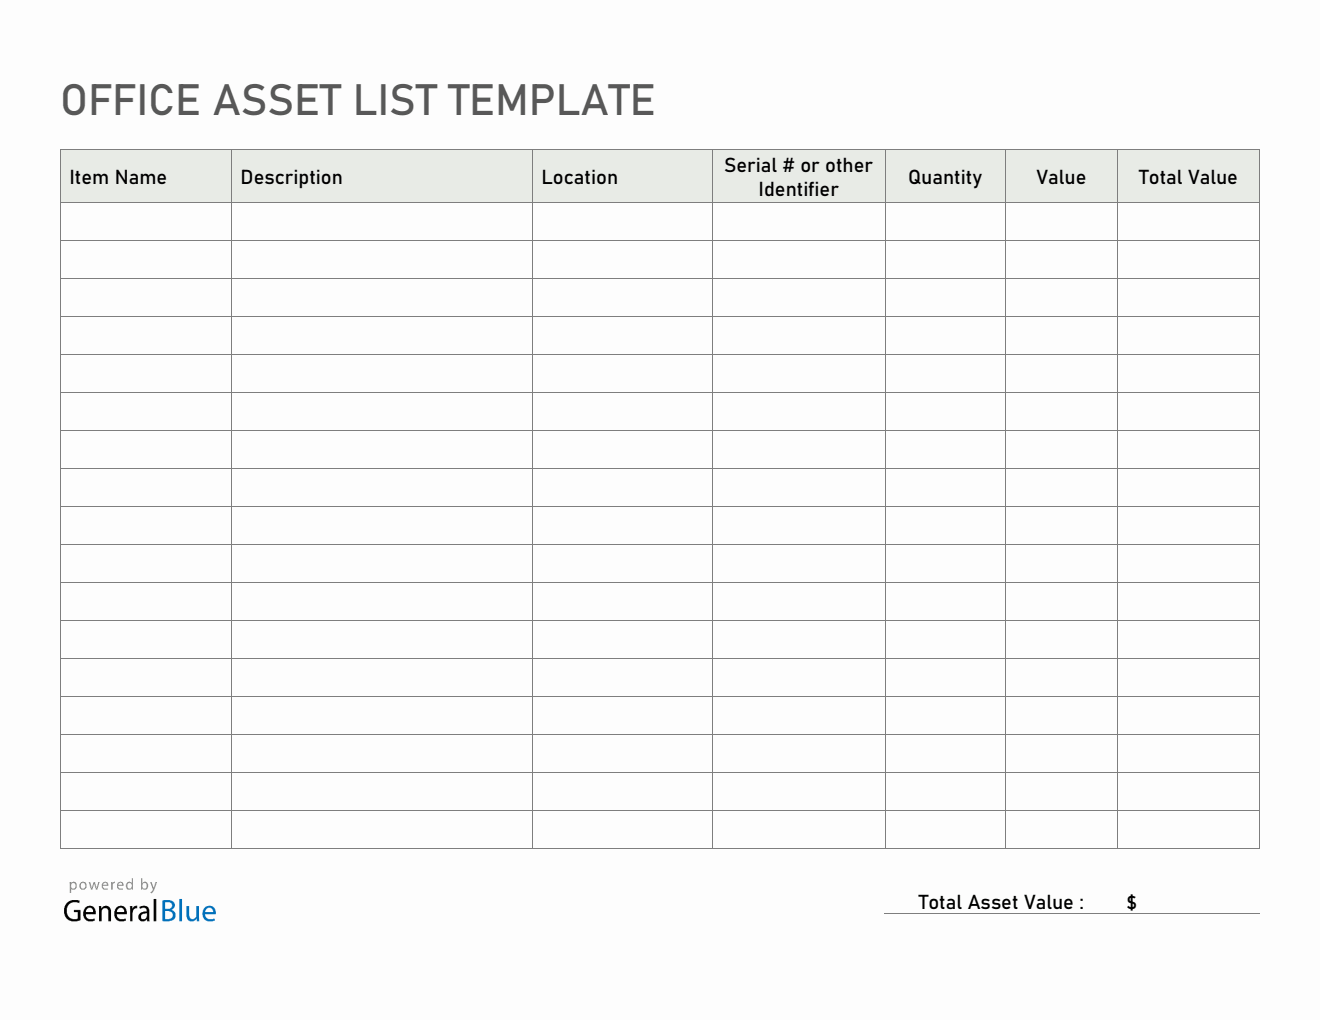 Office Asset List Template in PDF